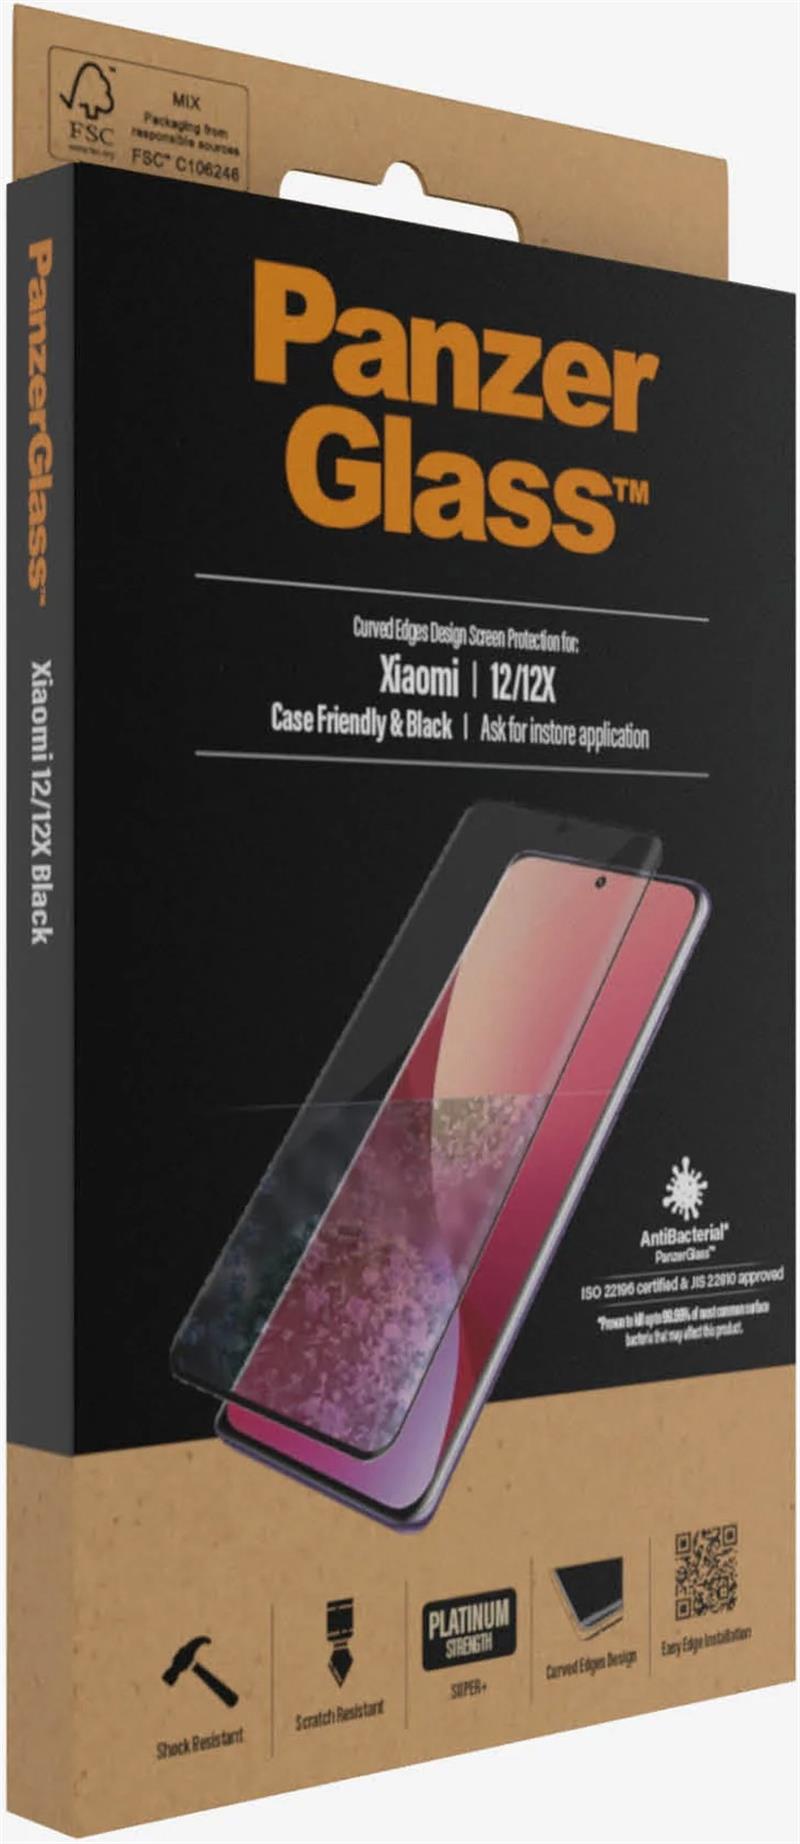 PanzerGlass Xiaomi 12 12x - Black Case Friendly - Anti-Bacterial - SUPER Glass